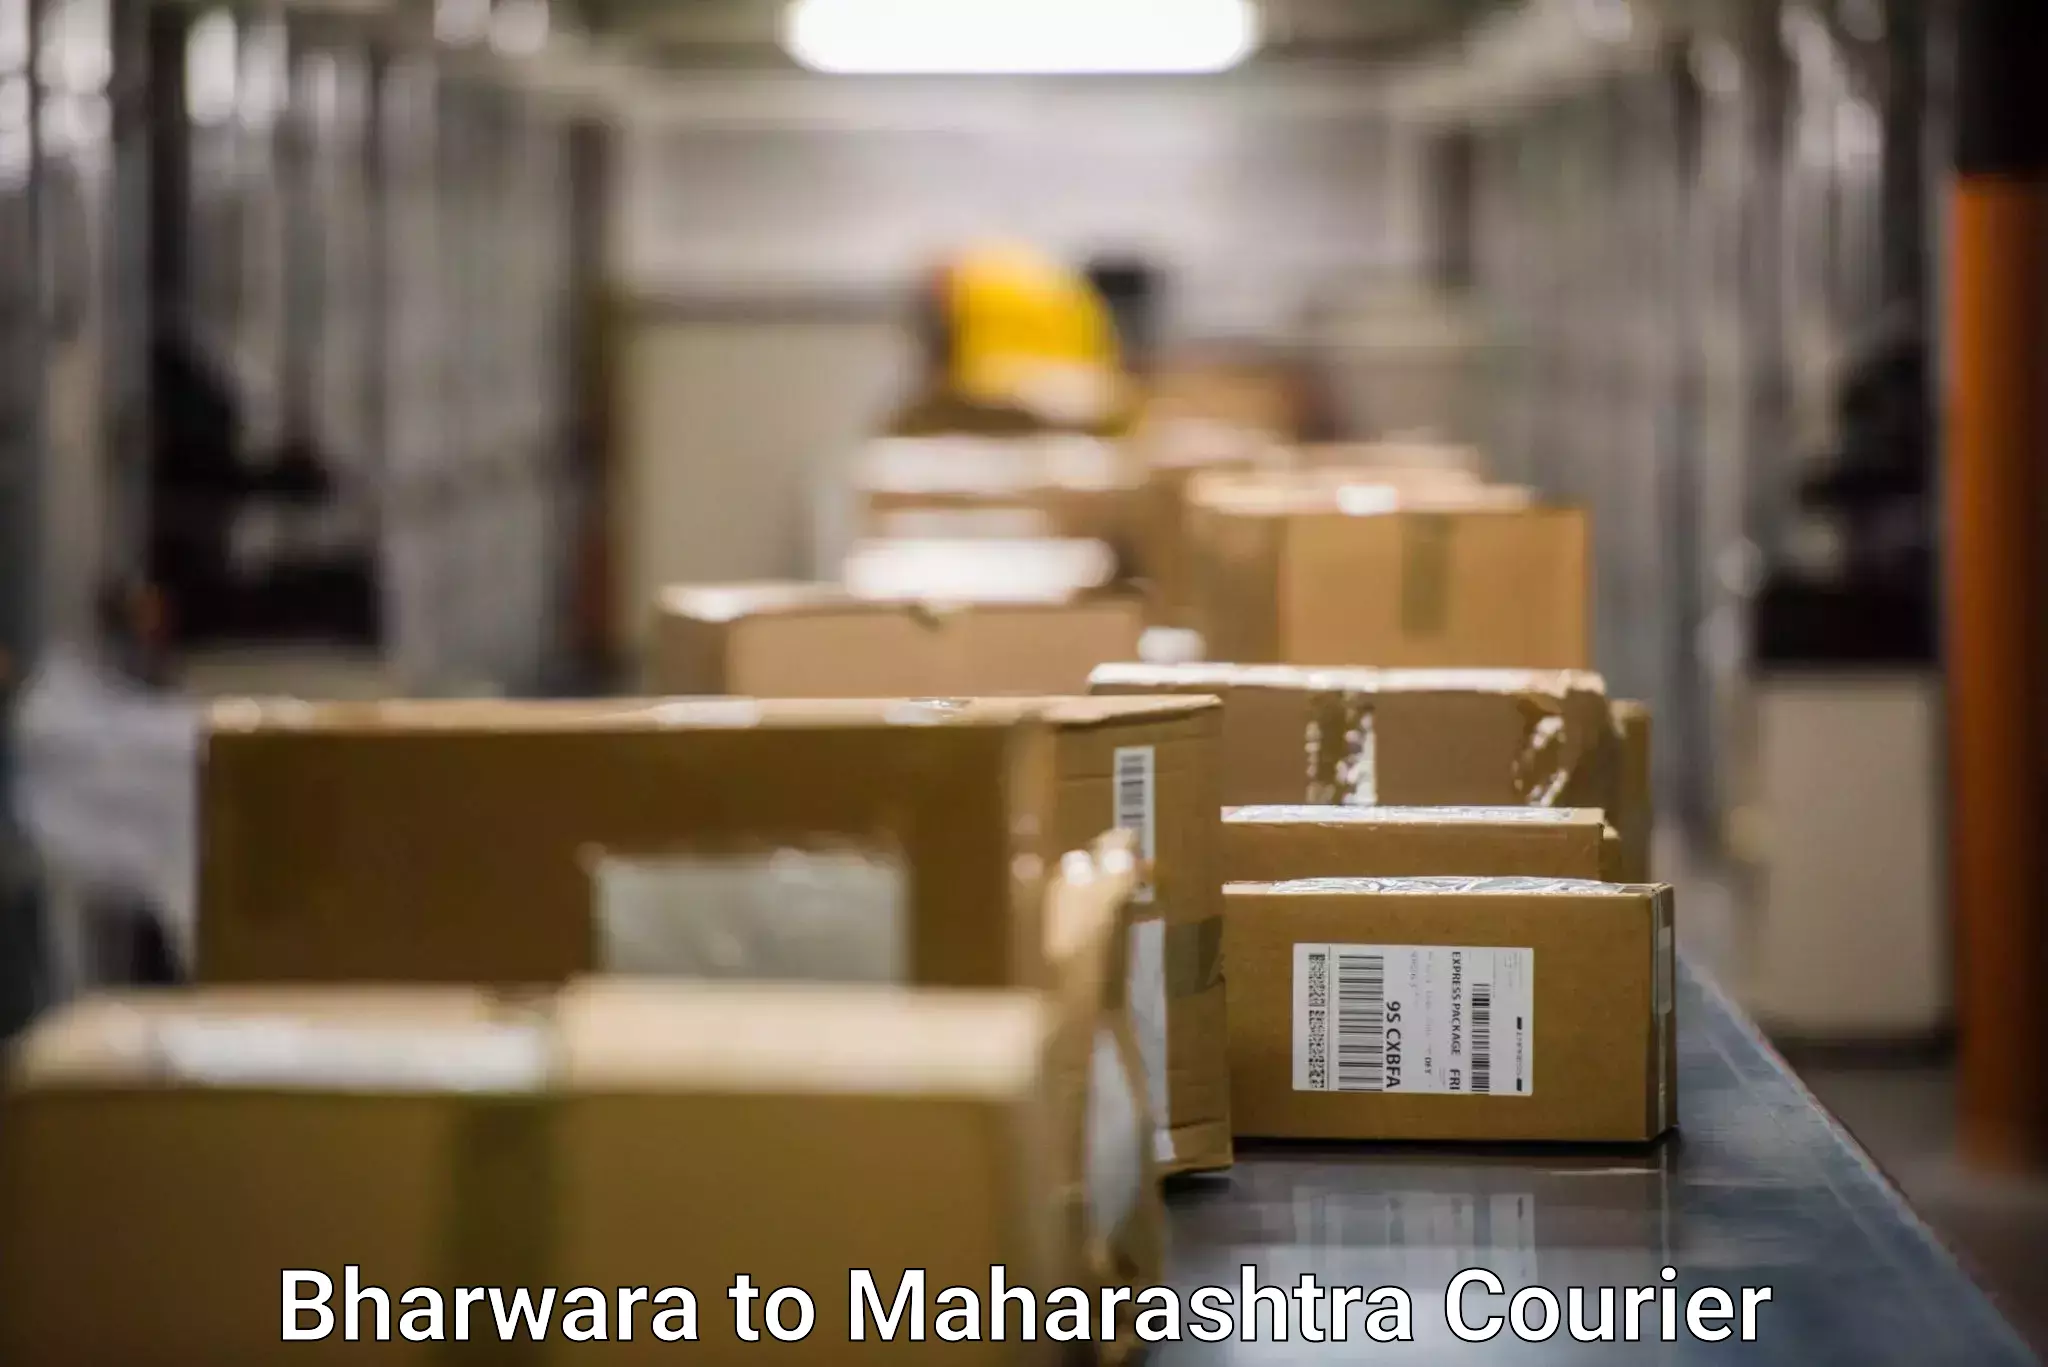 Fast delivery service Bharwara to Nashik